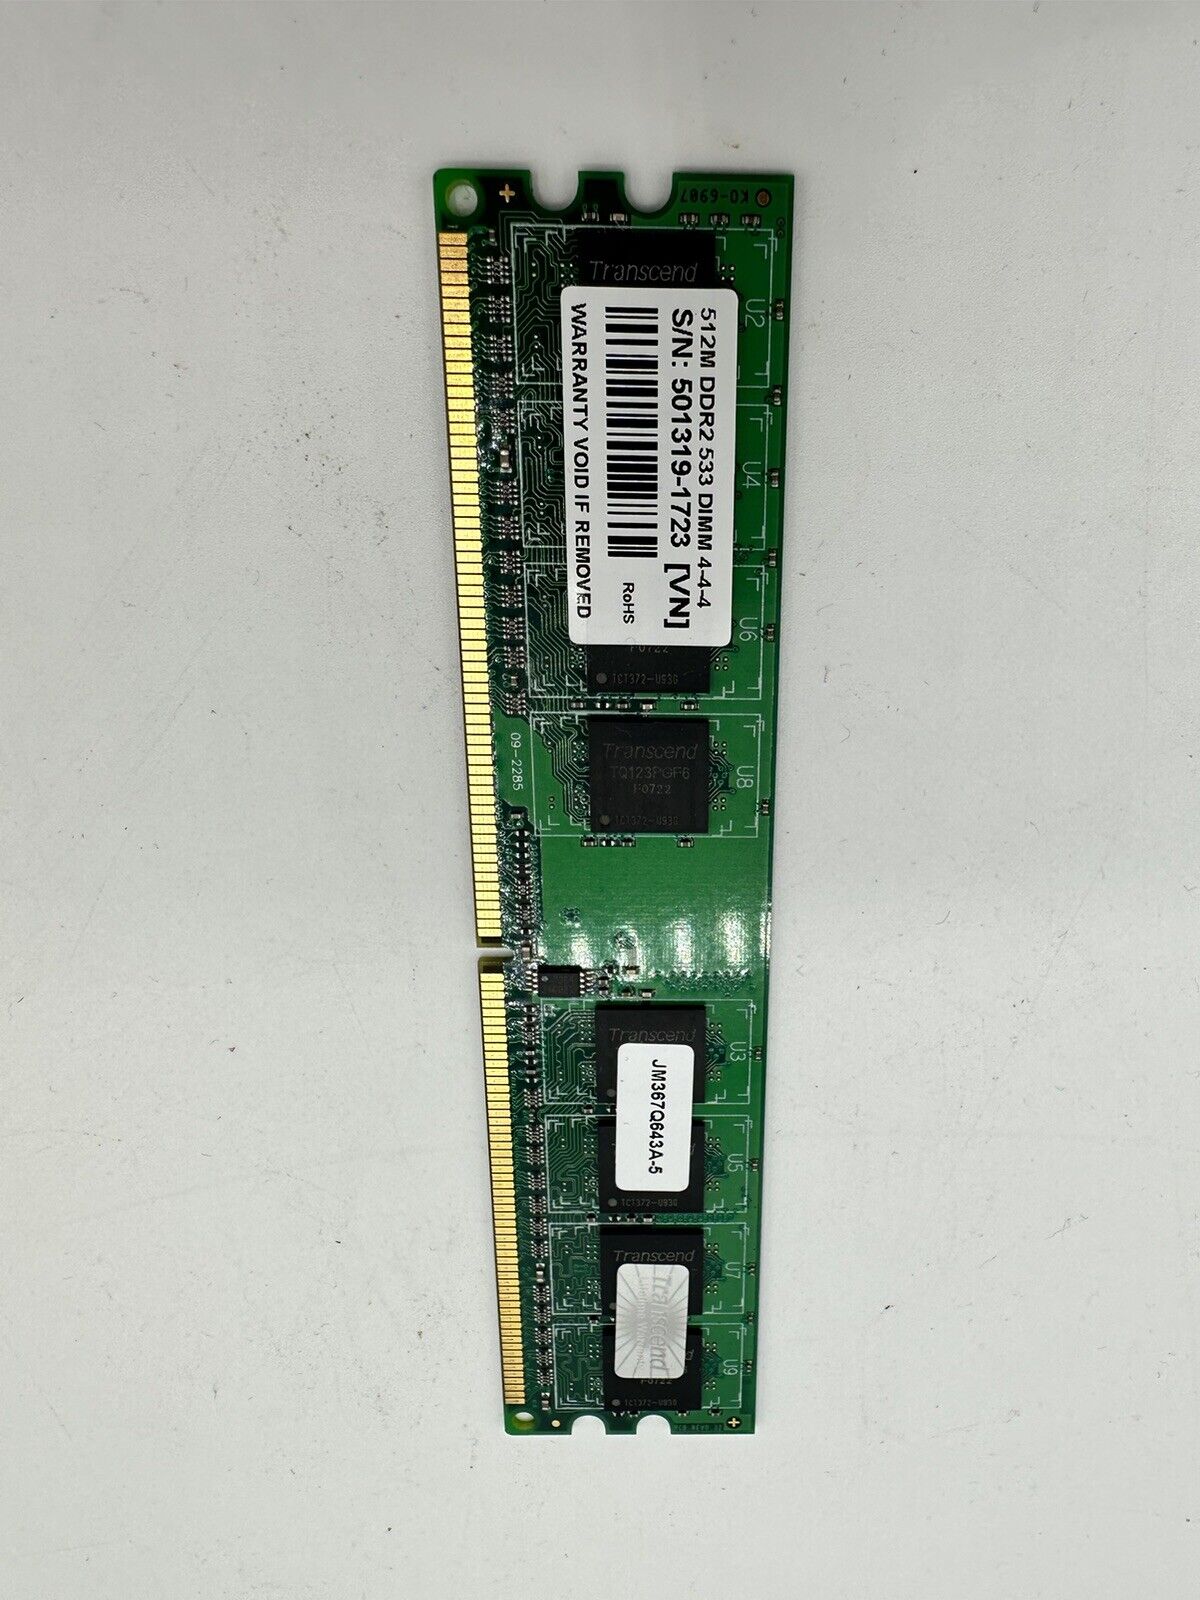 Transcend 512M DDR2 533 DIMM Memory RAM- manufacture, lifetime warranty